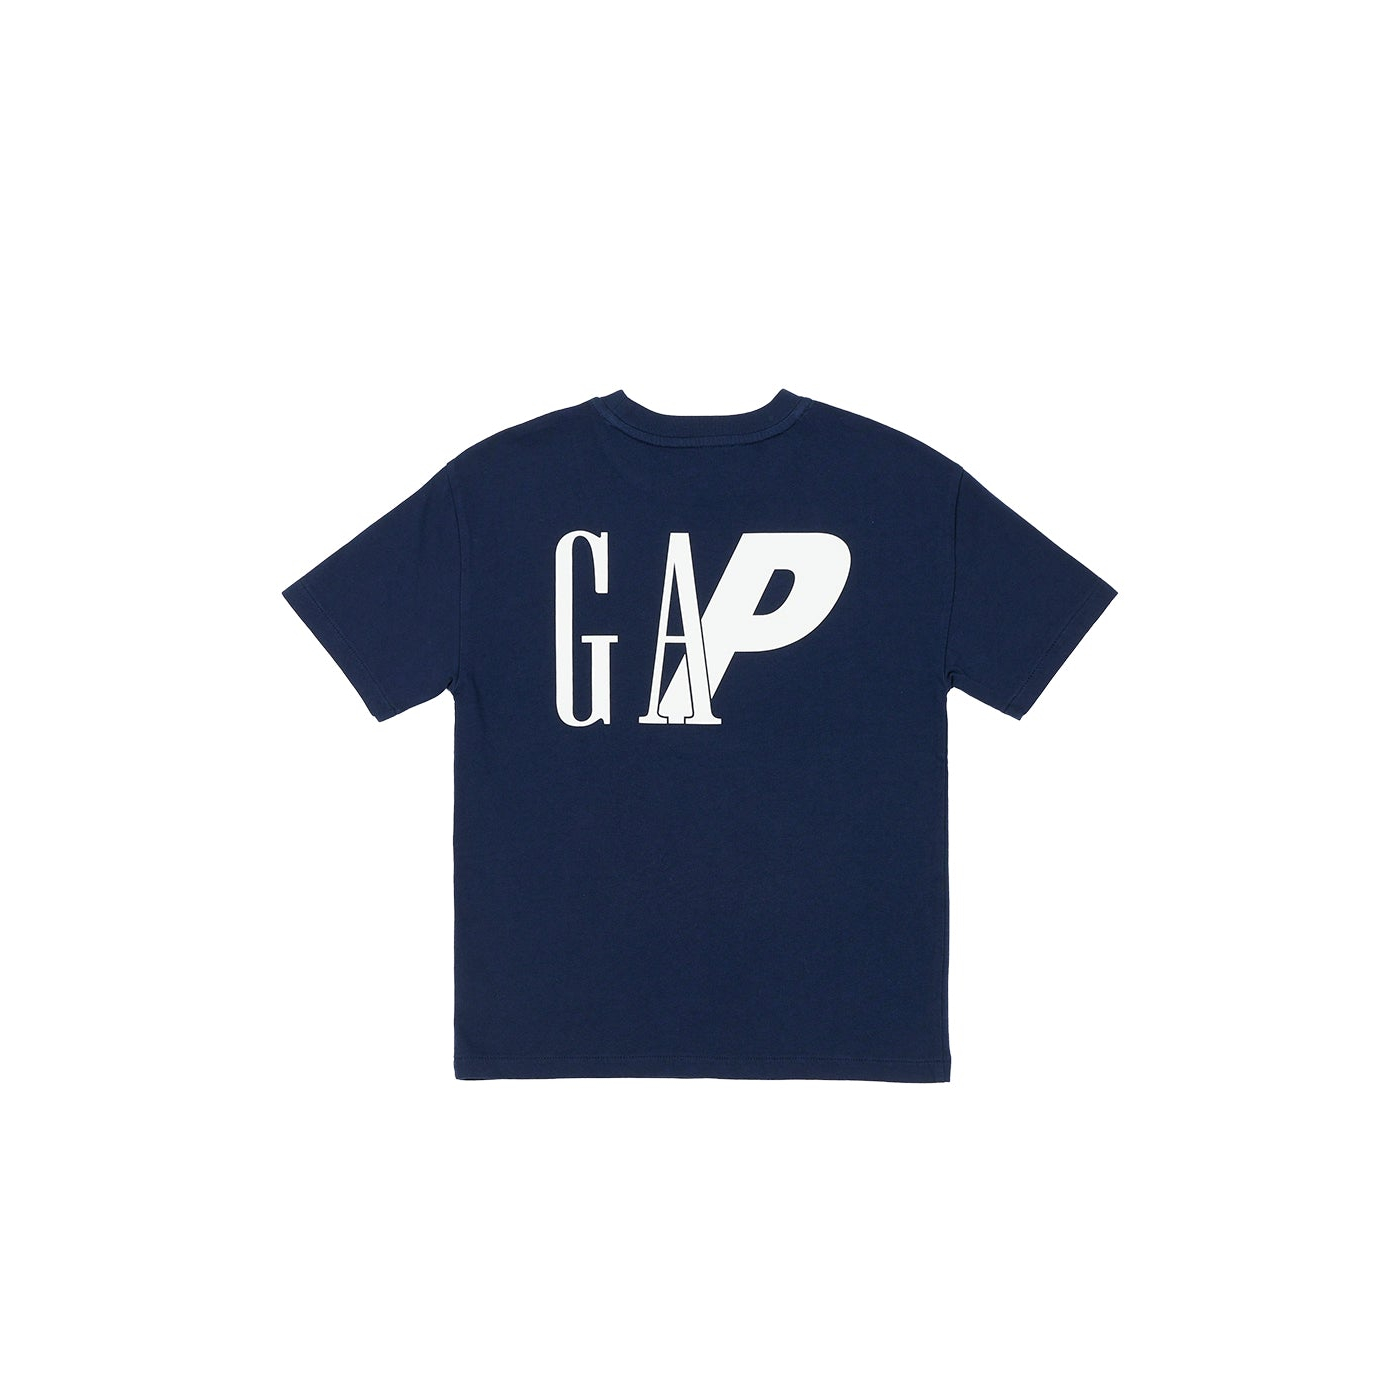 Palace x Gap Kids Rugby Shirt Multi